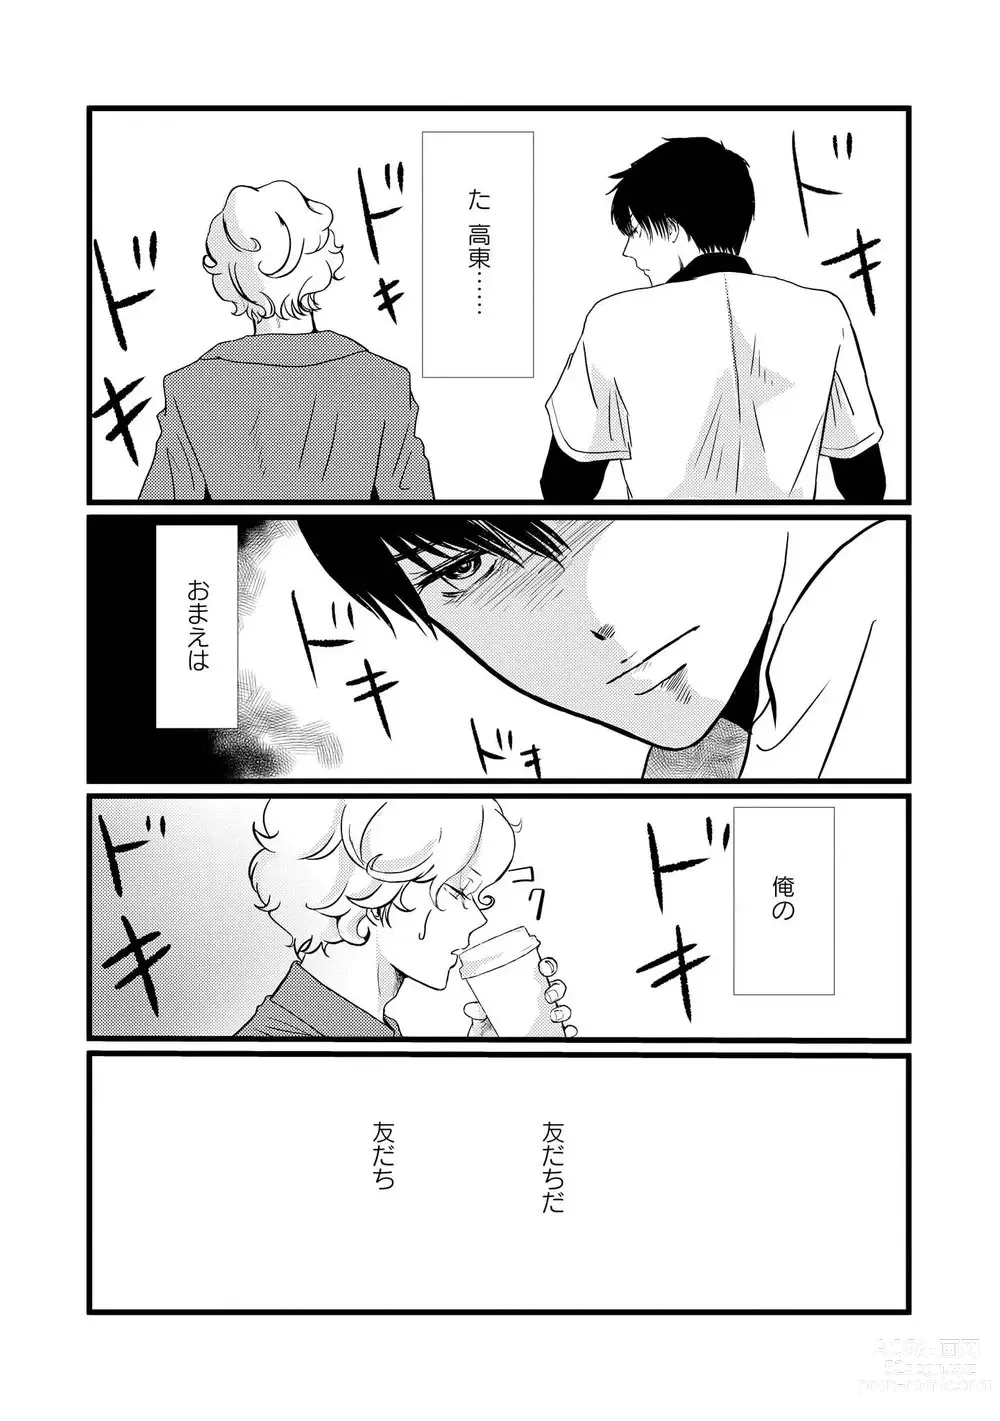 Page 23 of manga AHOERO